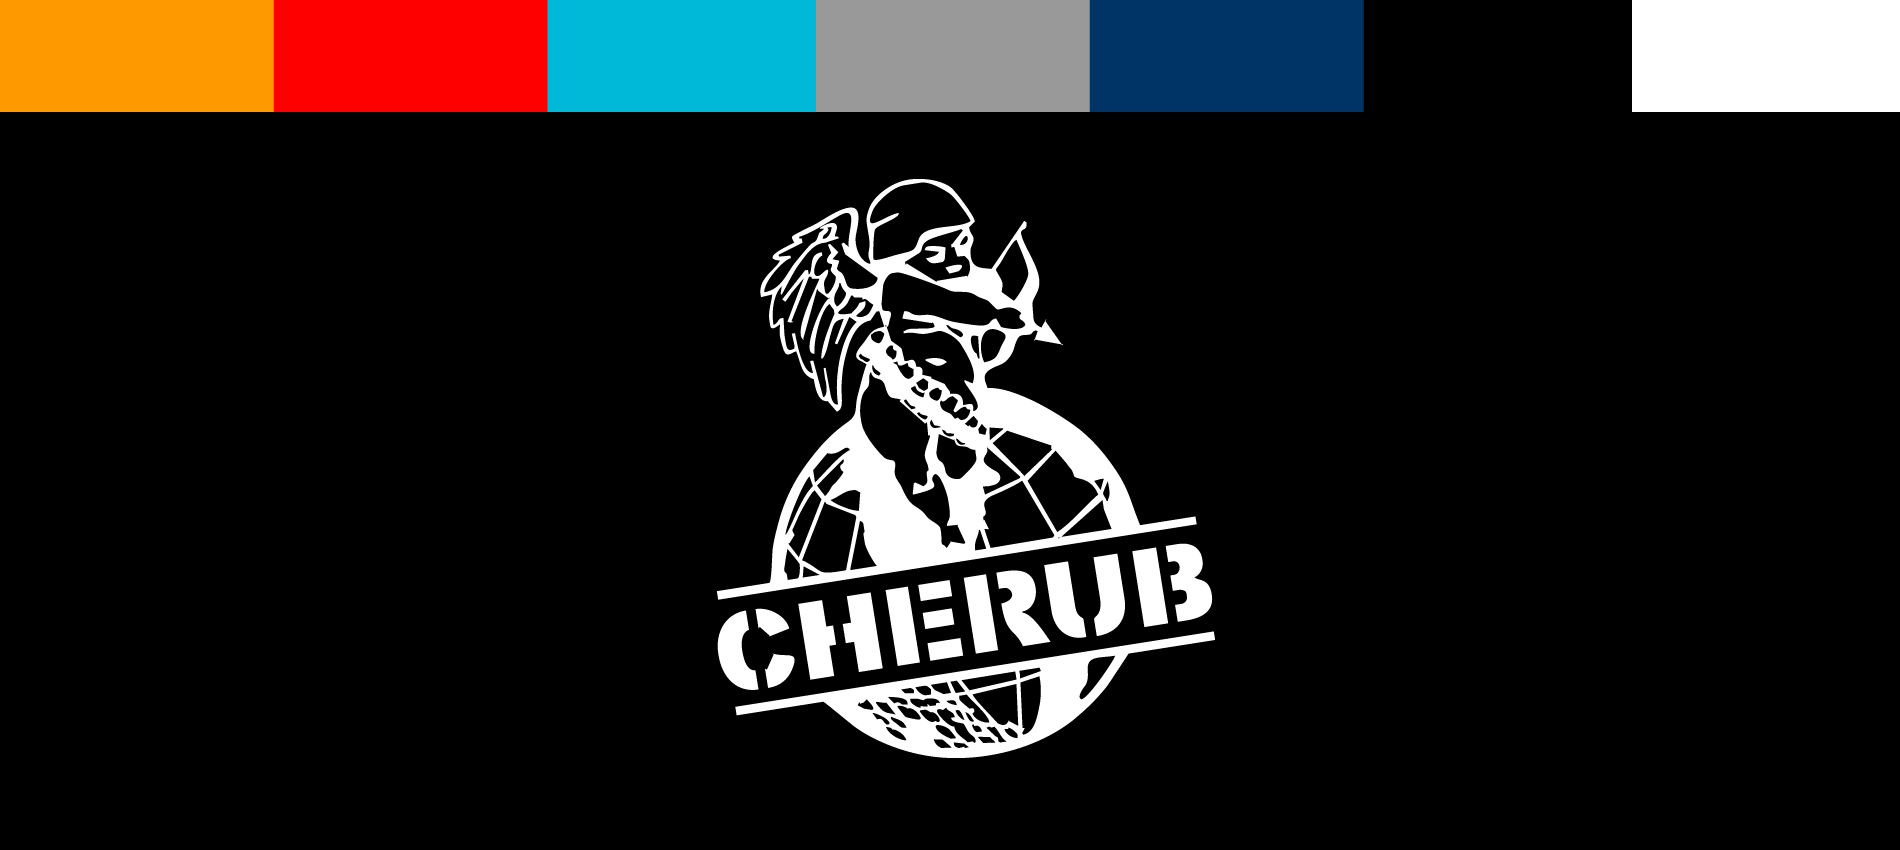 CHERUB banner.png